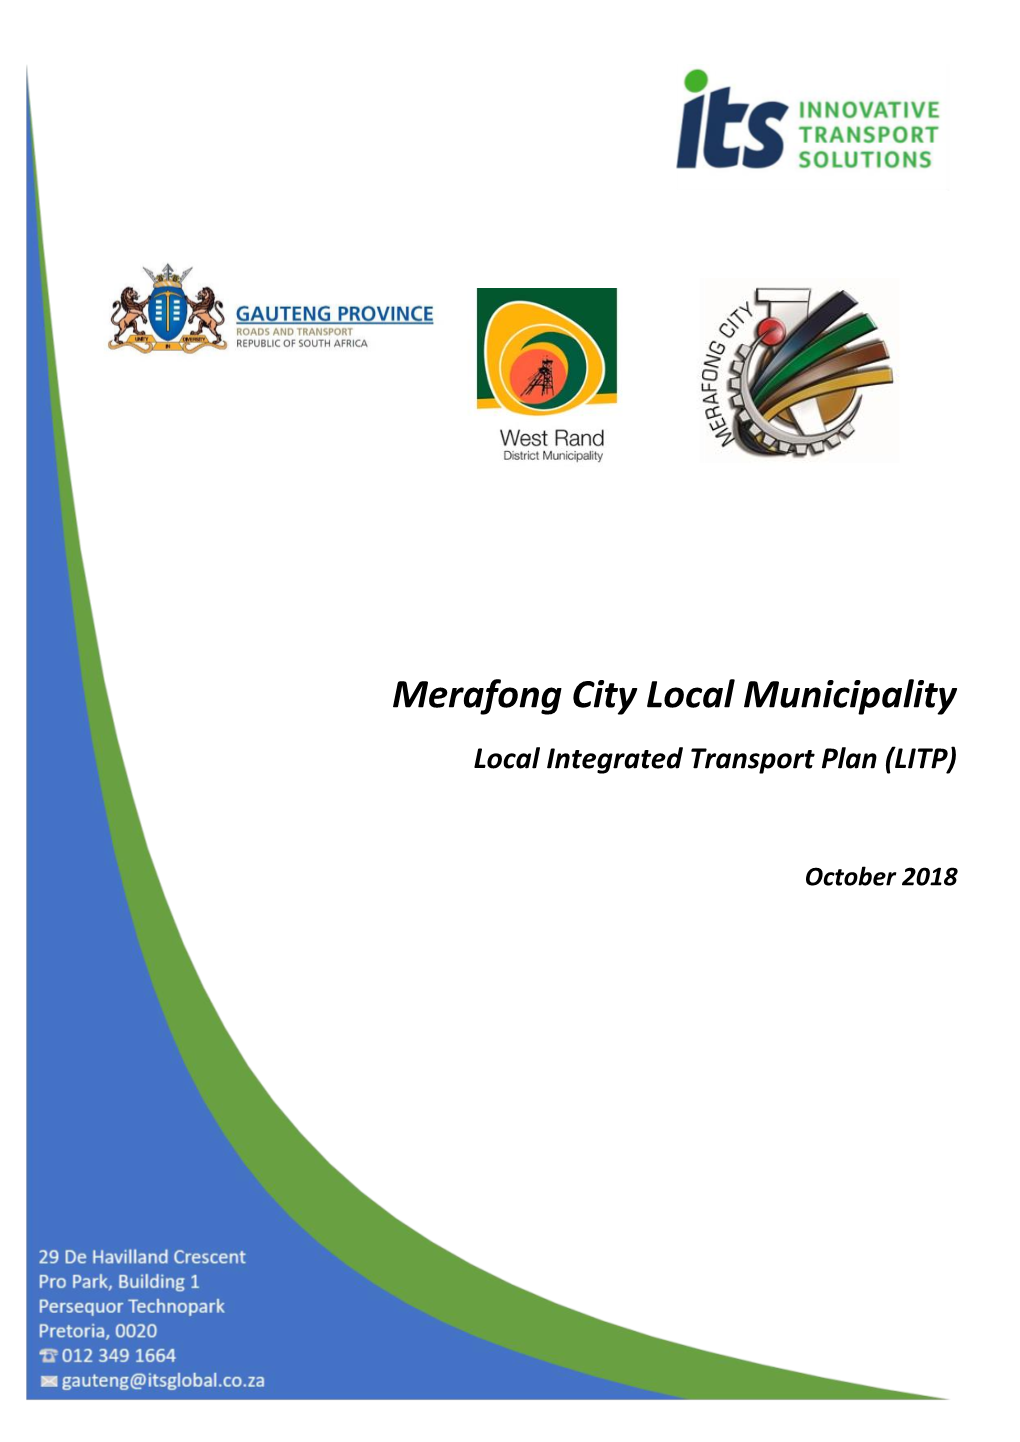 Merafong City Local Municipality Local Integrated Transport Plan (LITP)